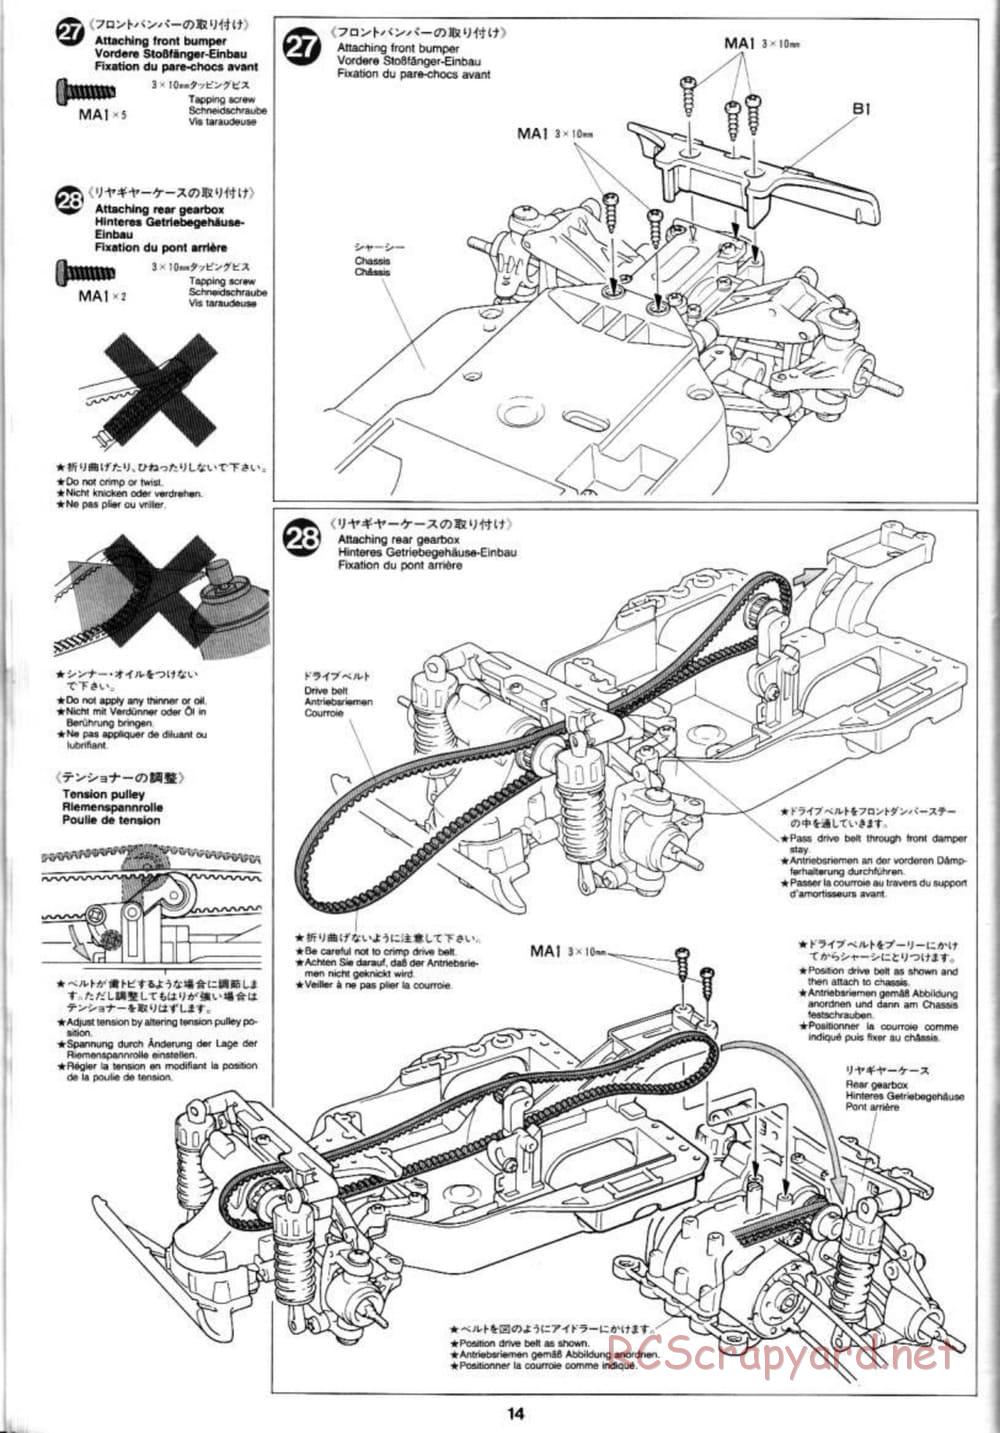 Tamiya - PIAA Porsche 911 - TA-03RS Chassis - Manual - Page 14